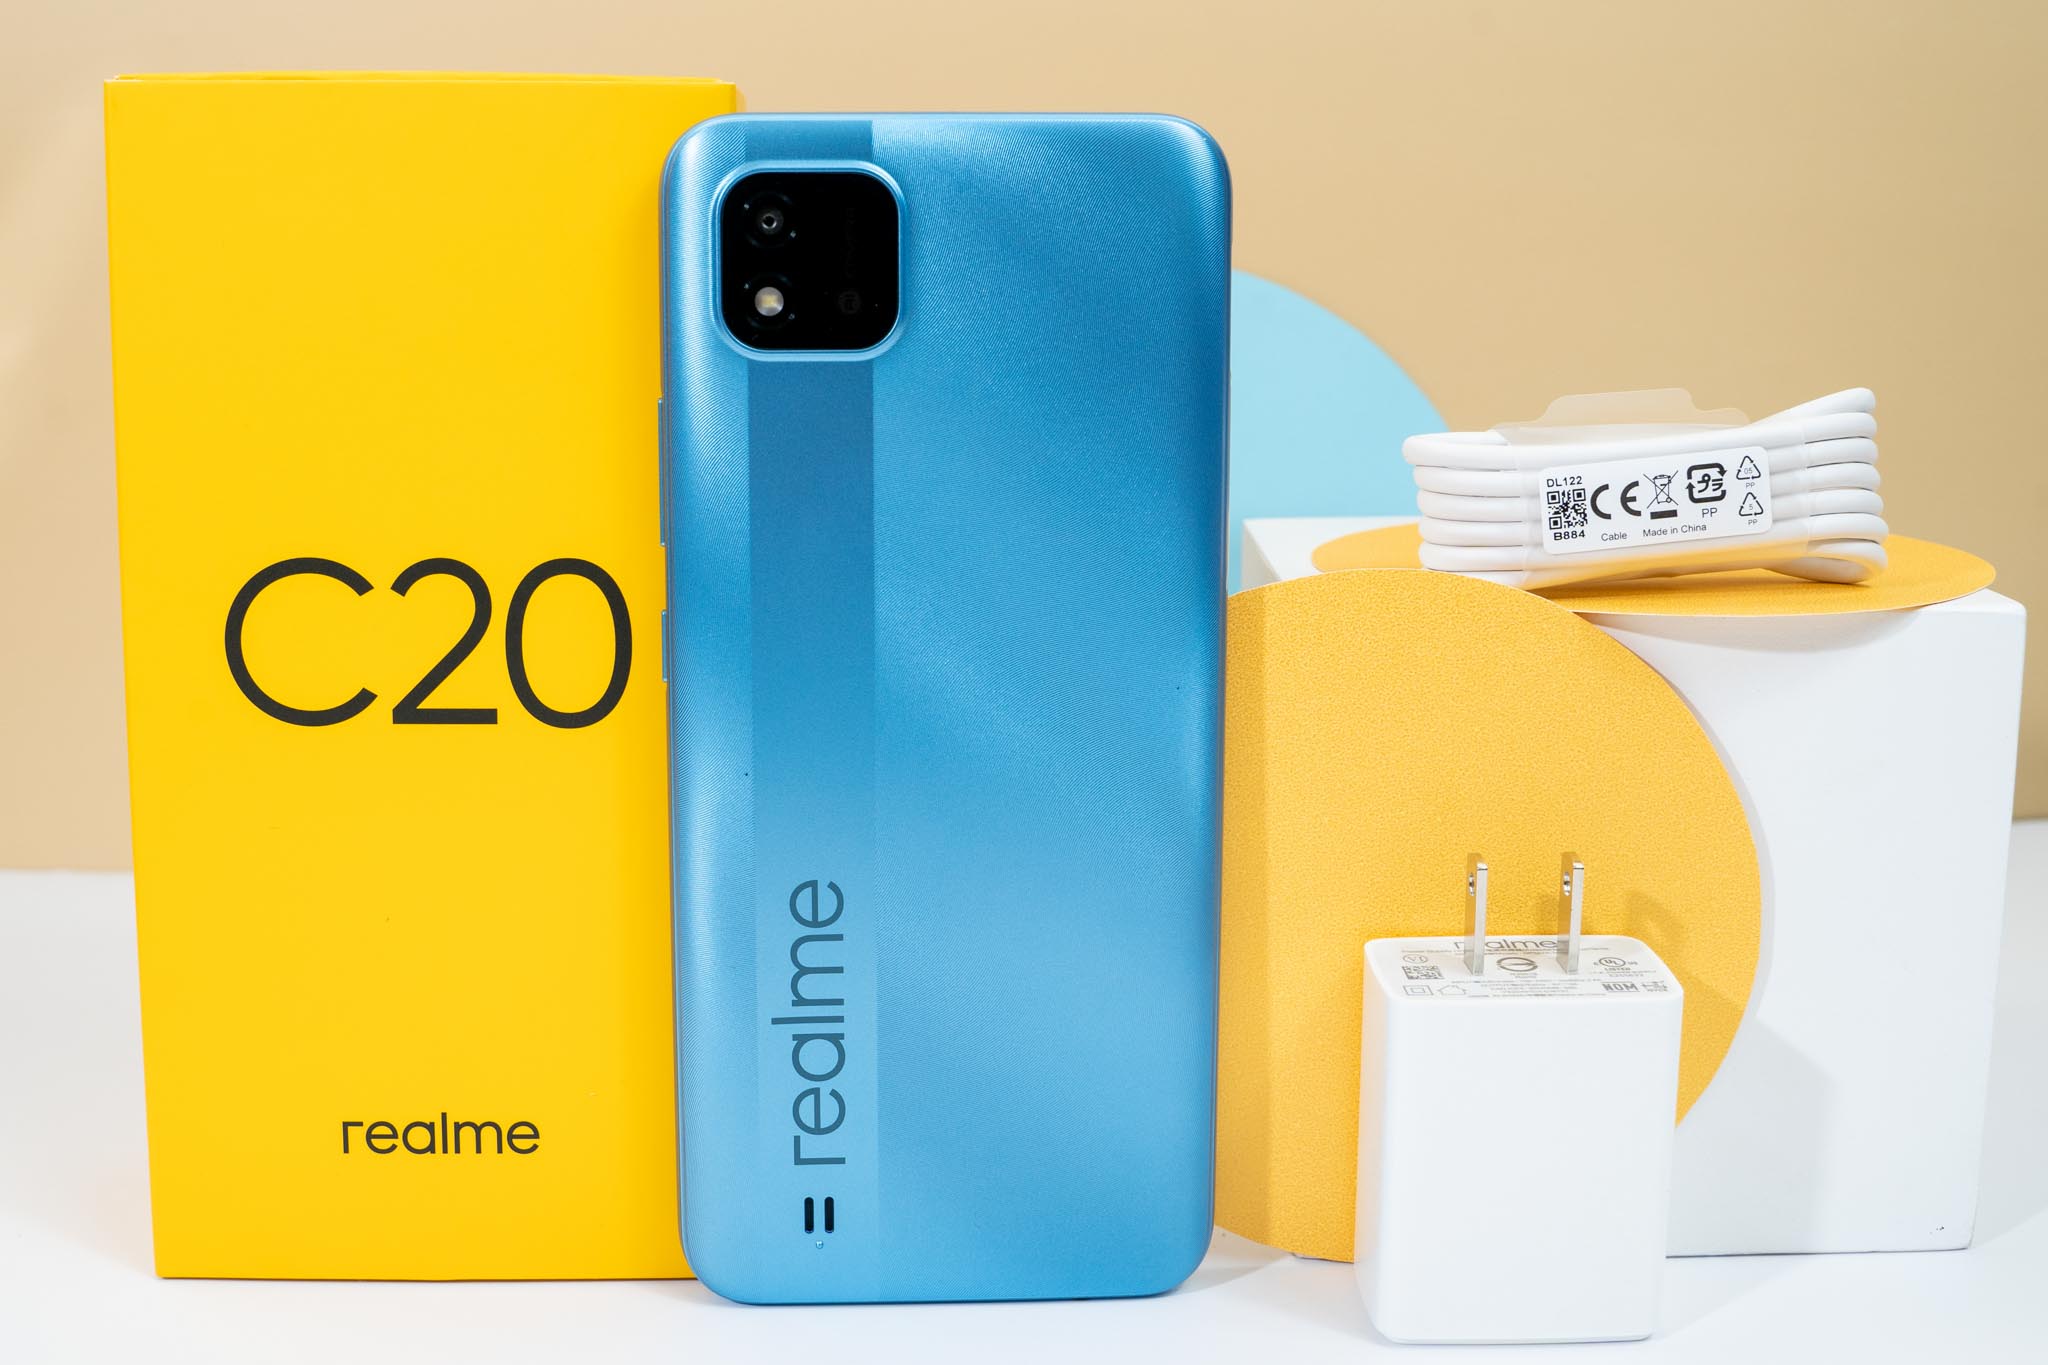 Realme mở bán Realme C20 giá 2,690,000 VND với “Flash sale” giảm 200,000 VND